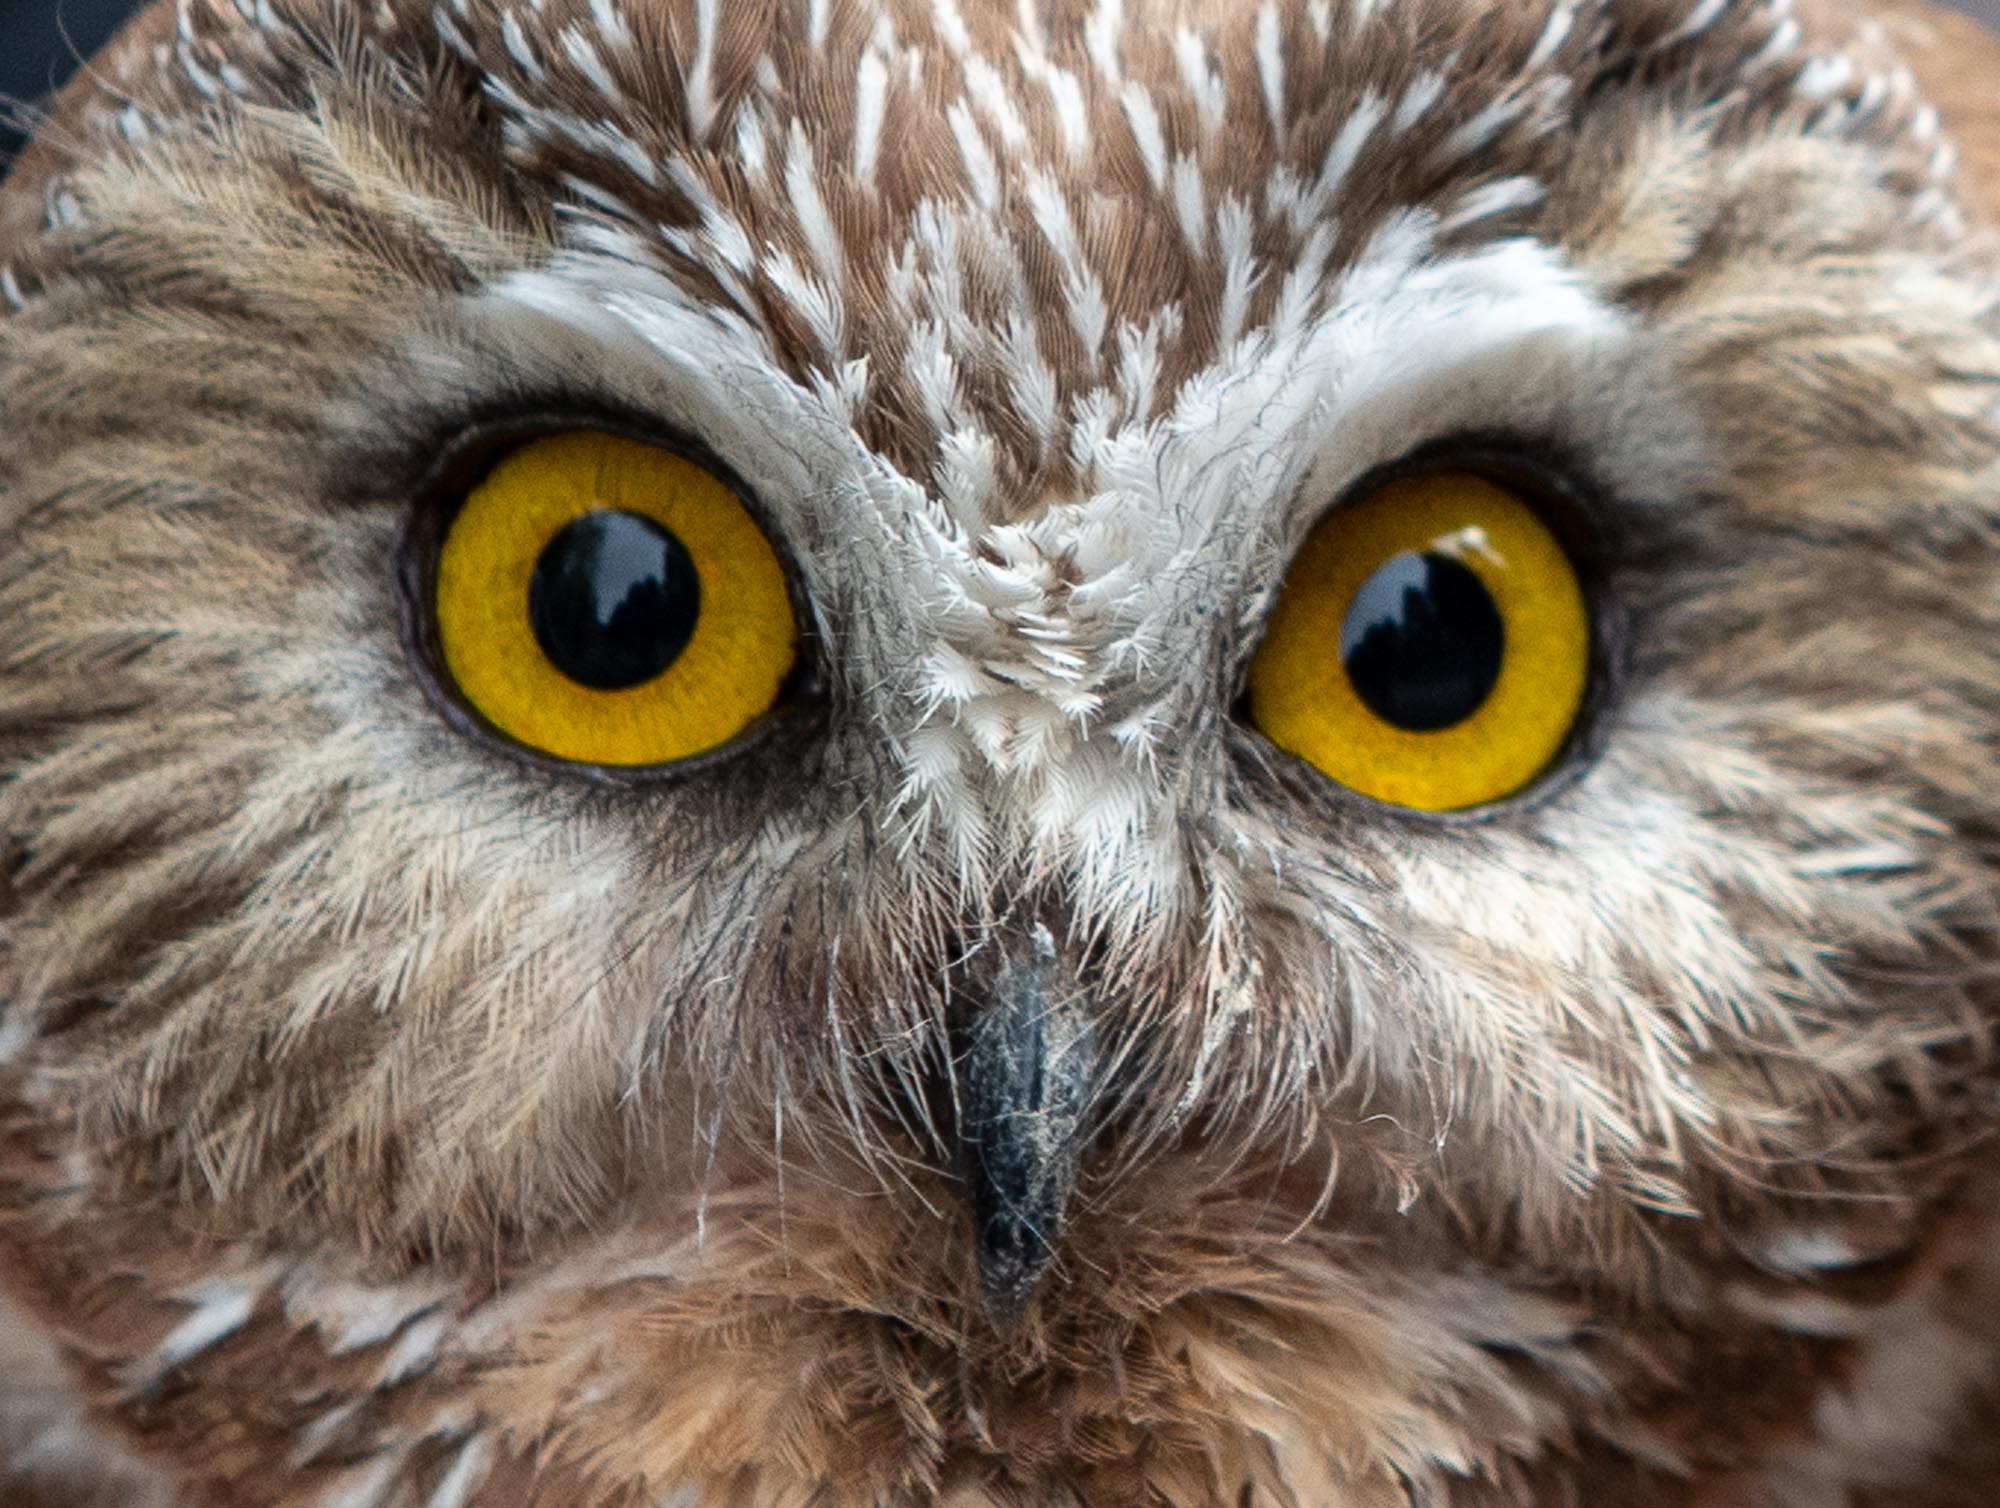 Montana Owl Workshop